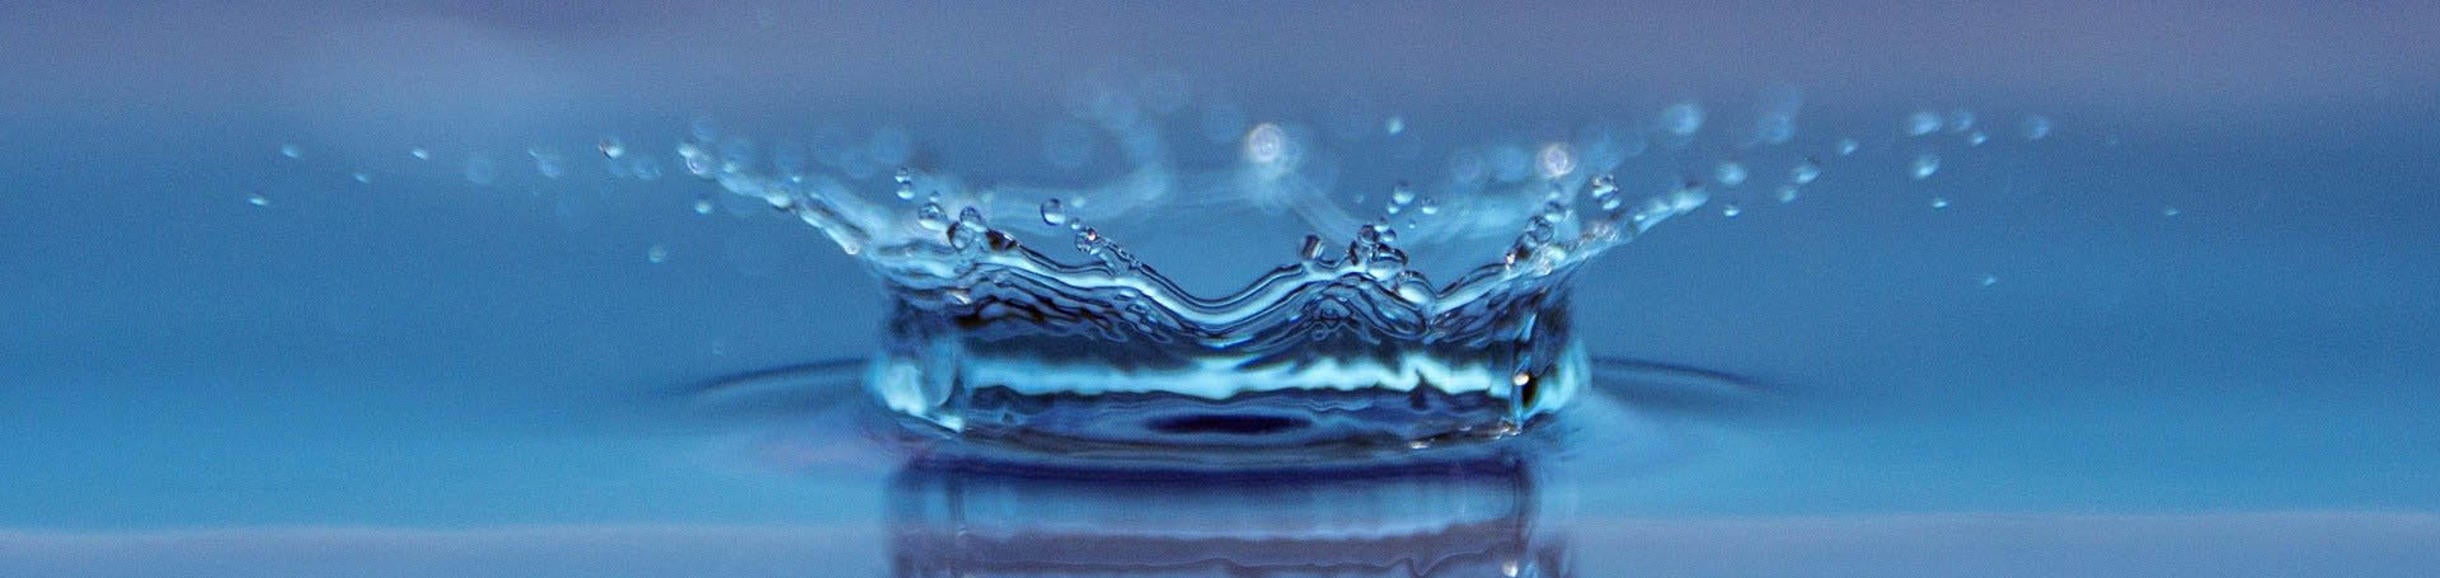 Drop of water / pixabay.com